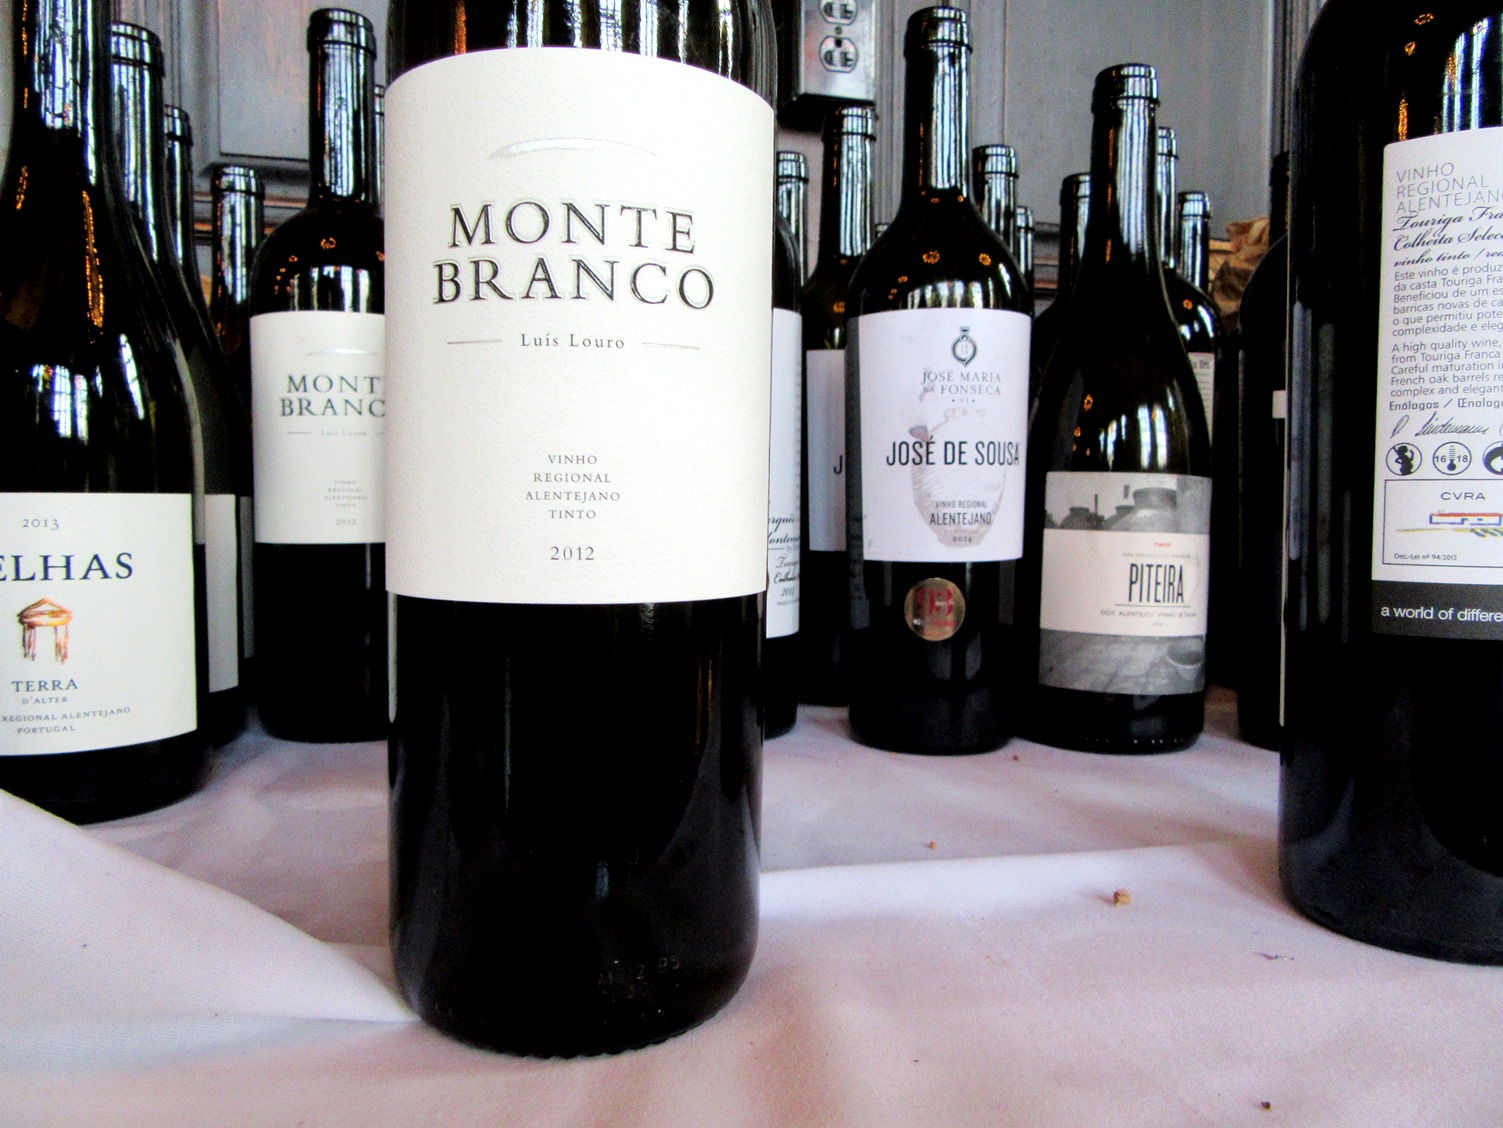 Adega do Monte Branco, Tinto 2012, Vinho Regional Alentejo, Portugal, Wine Casual